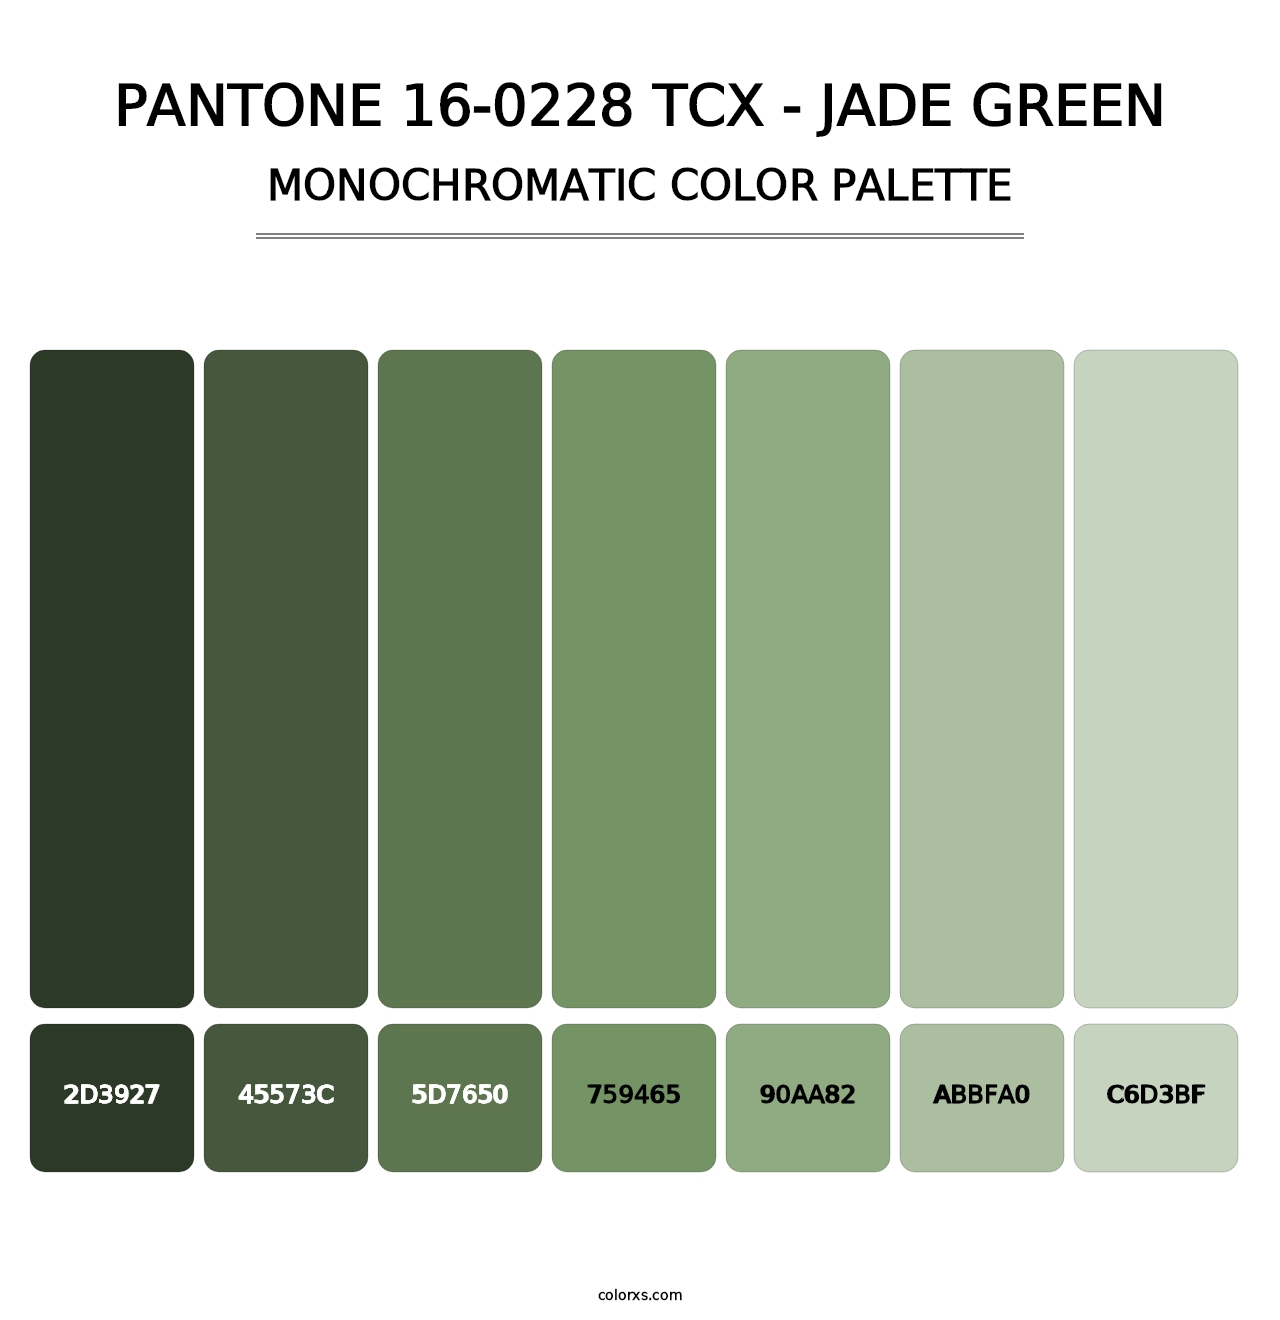 PANTONE 16-0228 TCX - Jade Green - Monochromatic Color Palette